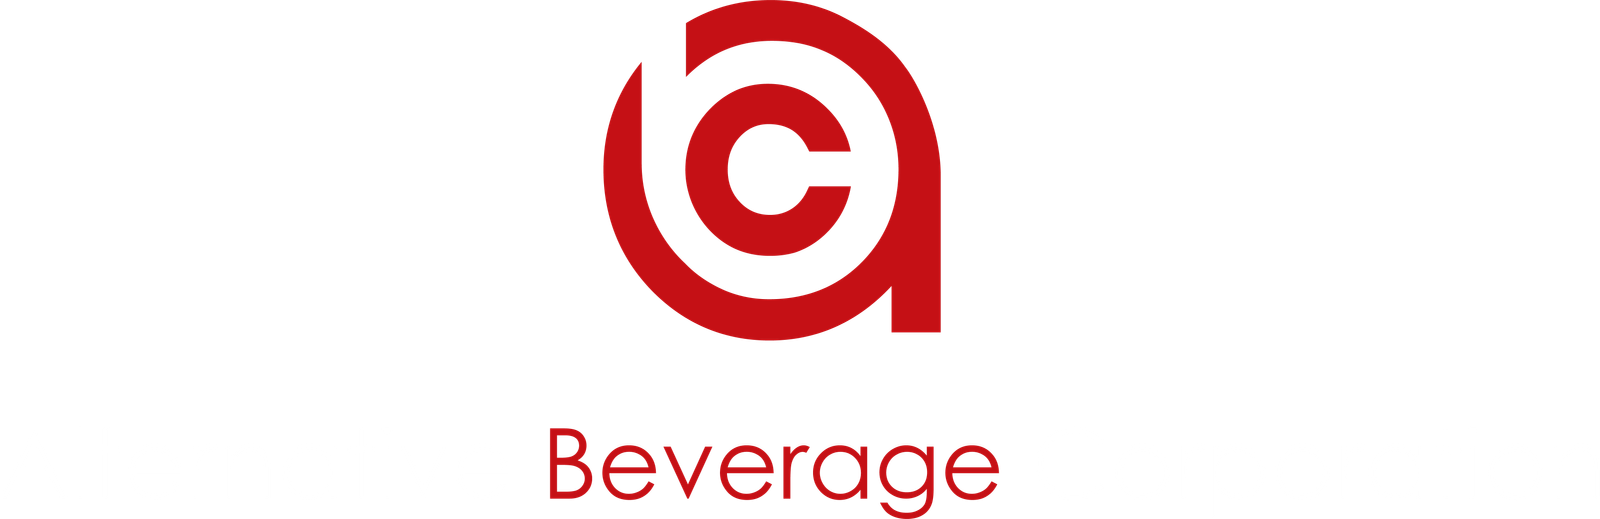 Alternative Beverage Corporation